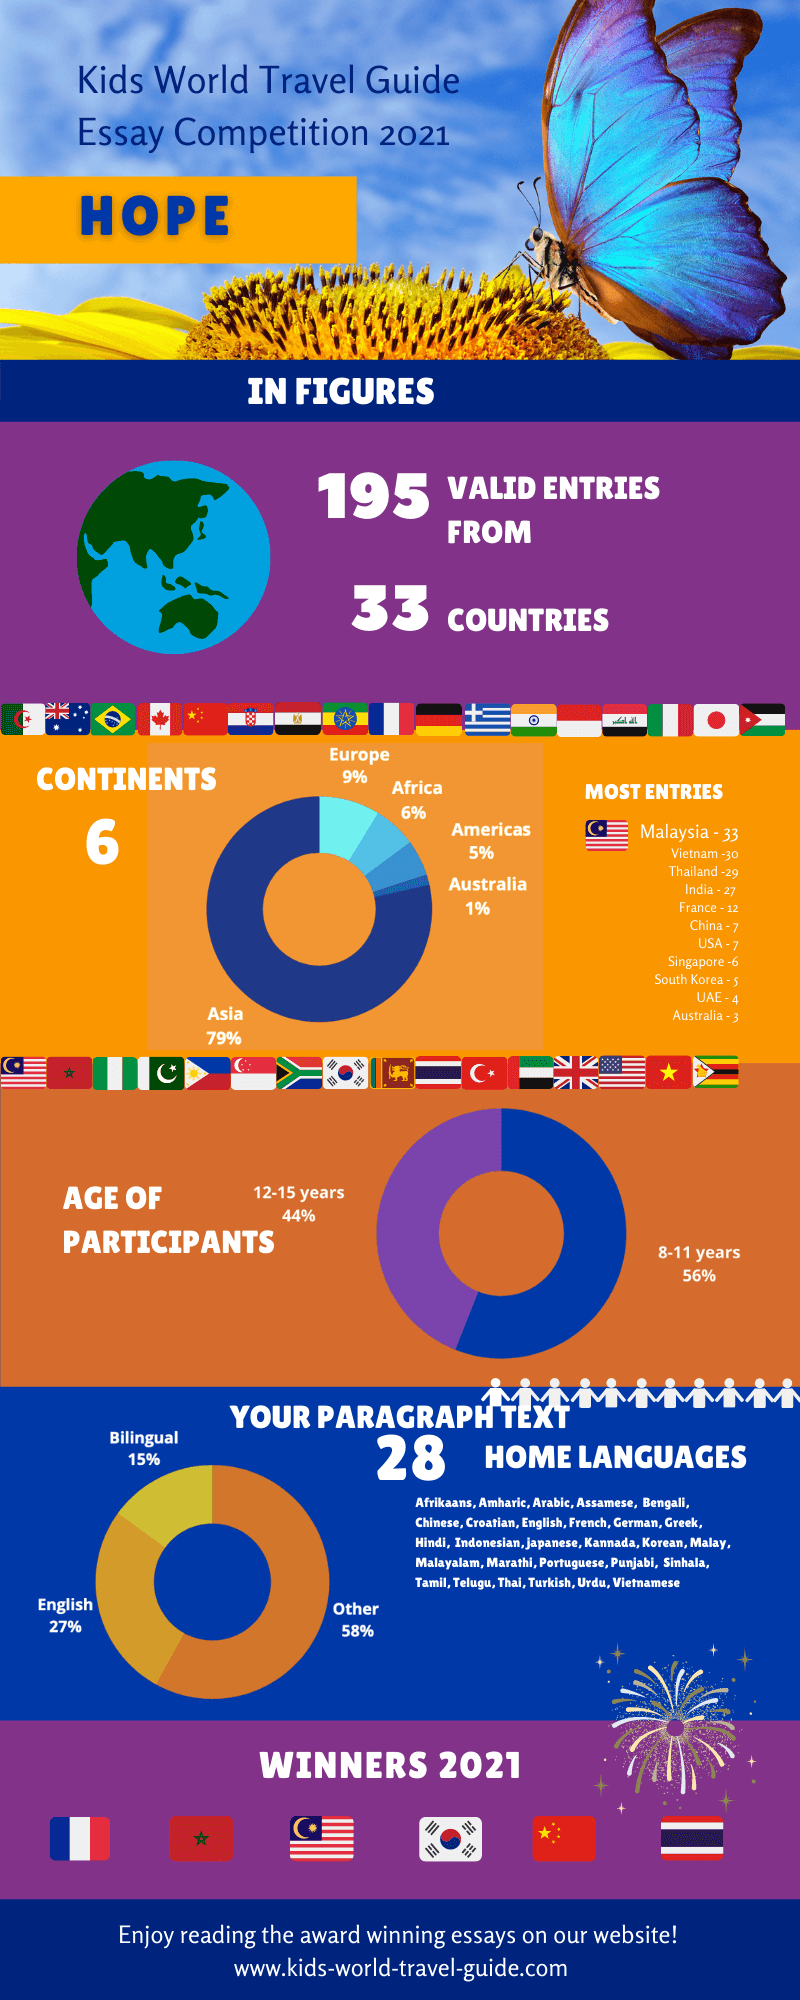 Kids World Travel Guide essay winners 2021 - infographic